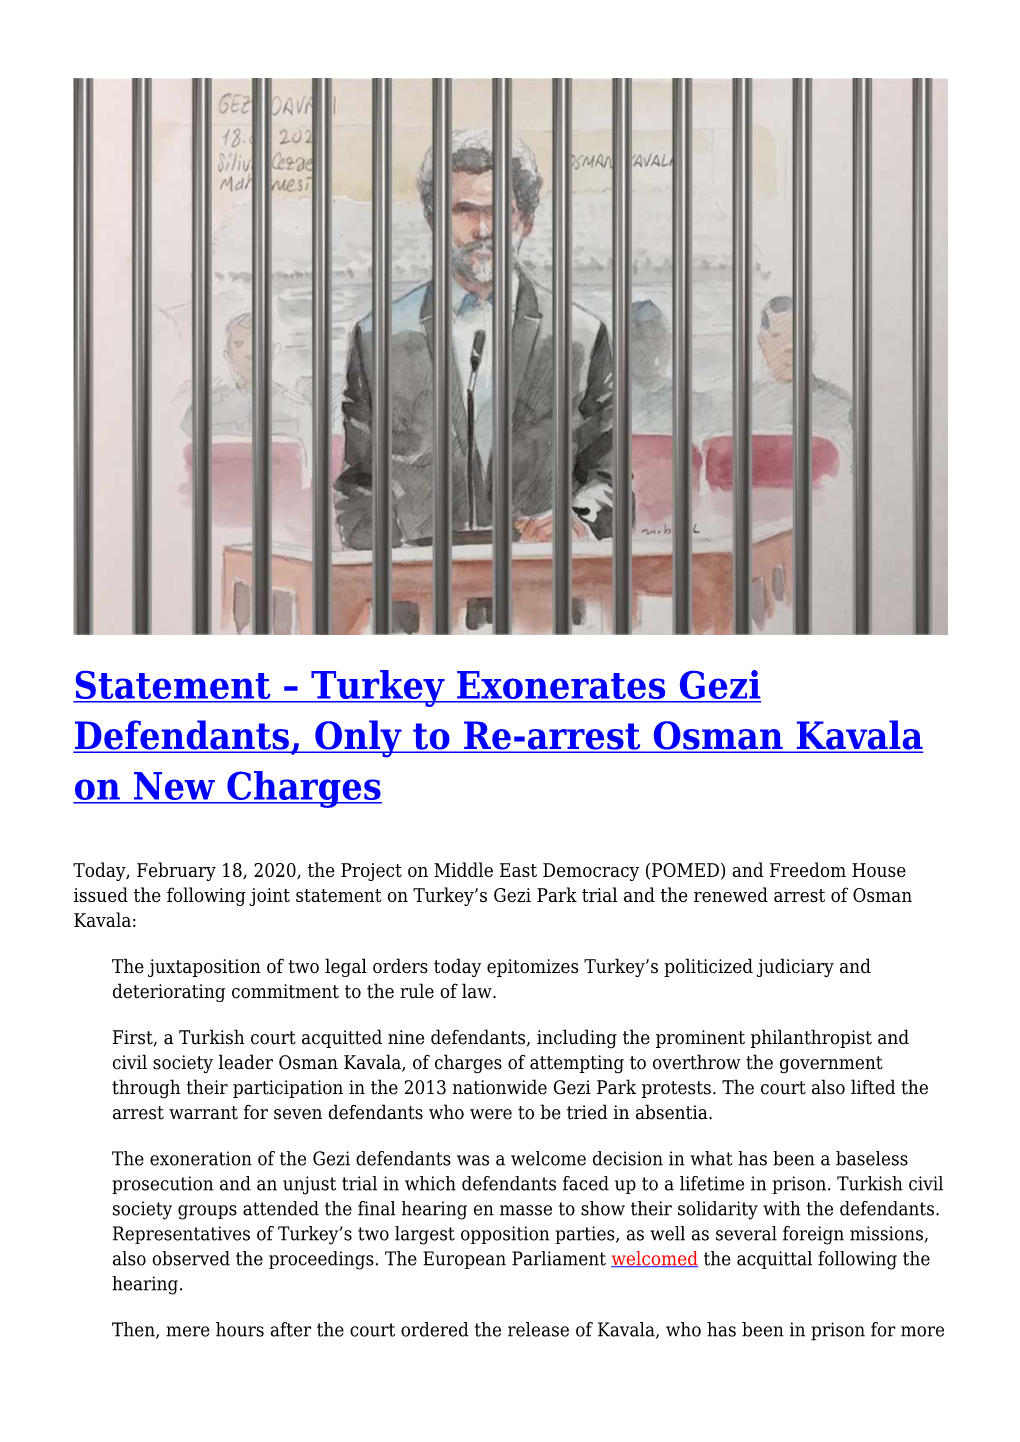 Statement – Turkey Exonerates Gezi Defendants, Only to Re-Arrest Osman Kavala on New Charges